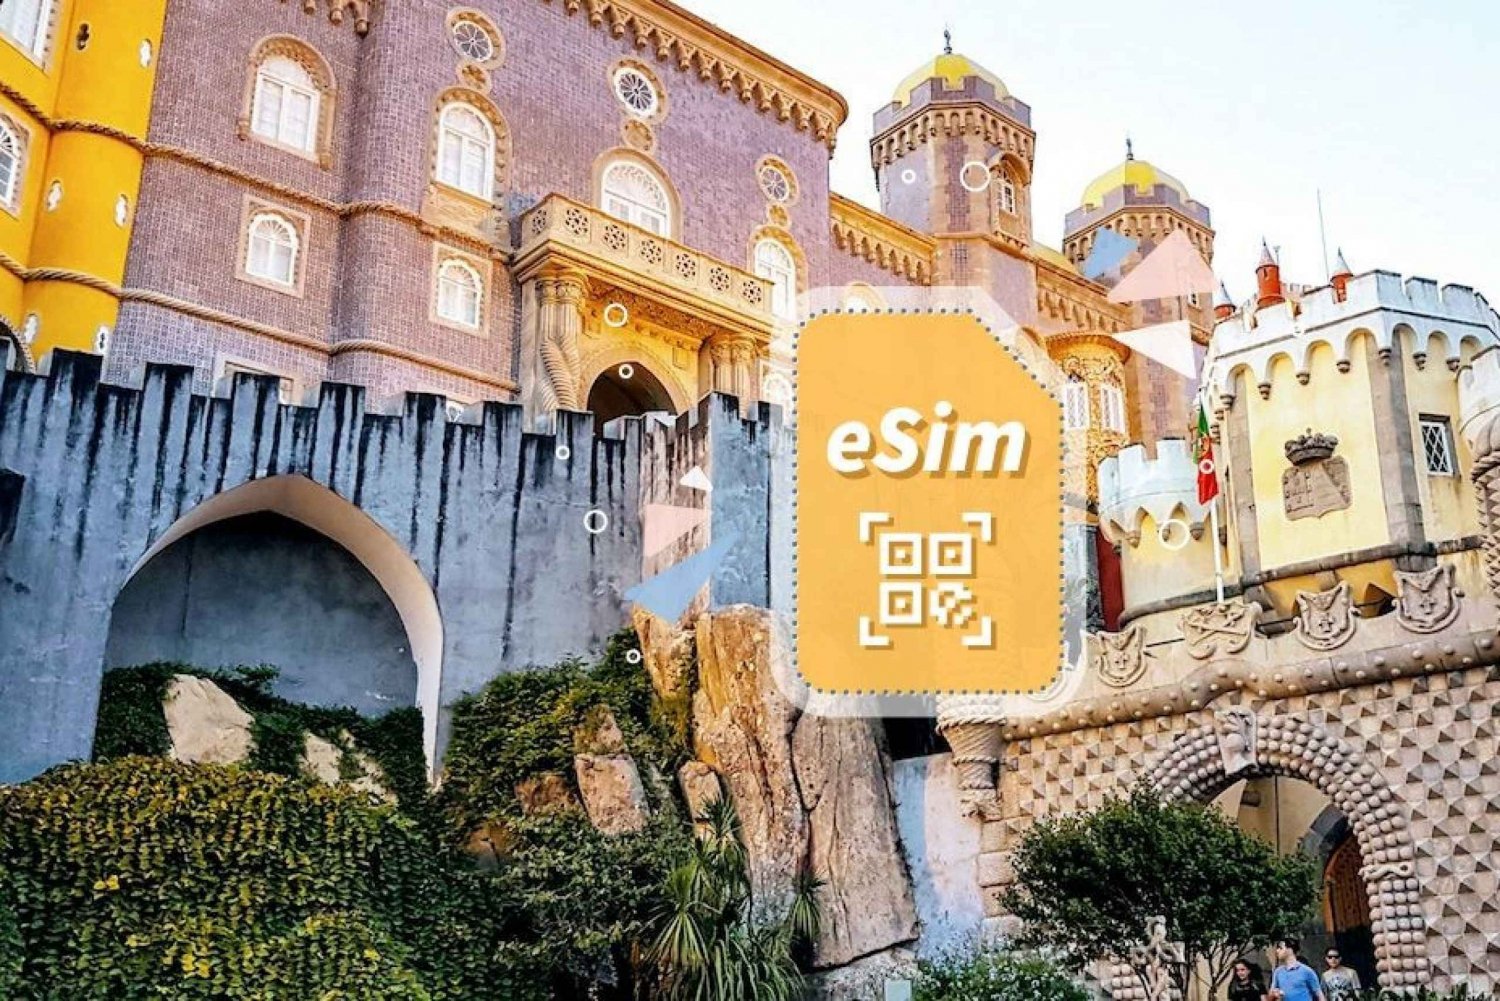 Portugali/Eurooppa: 5G eSim -mobiilidatapaketti